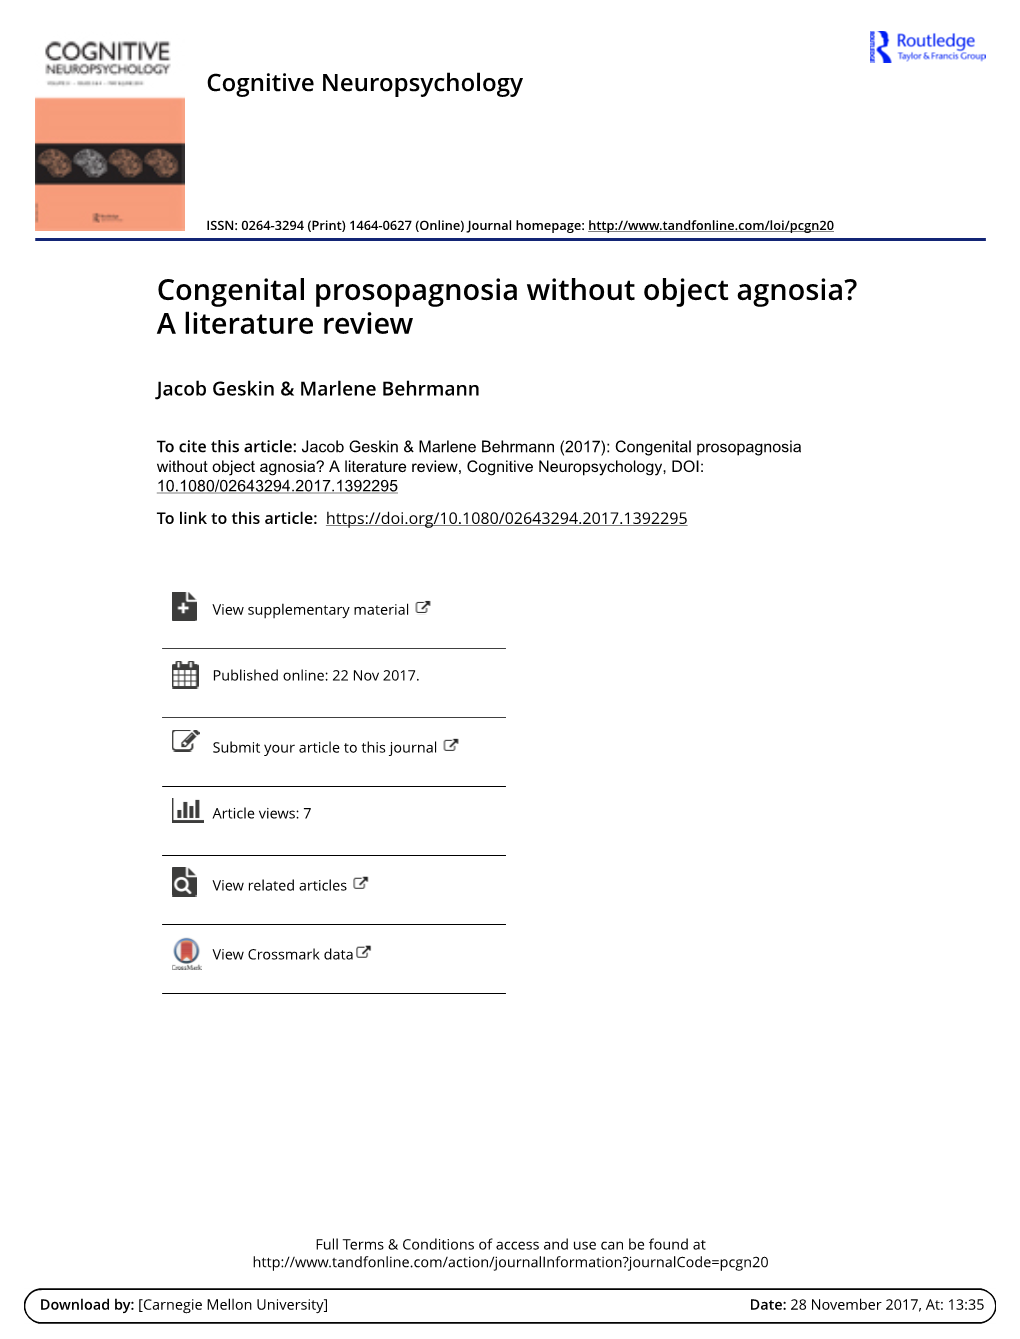 Congenital Prosopagnosia Without Object Agnosia? a Literature Review